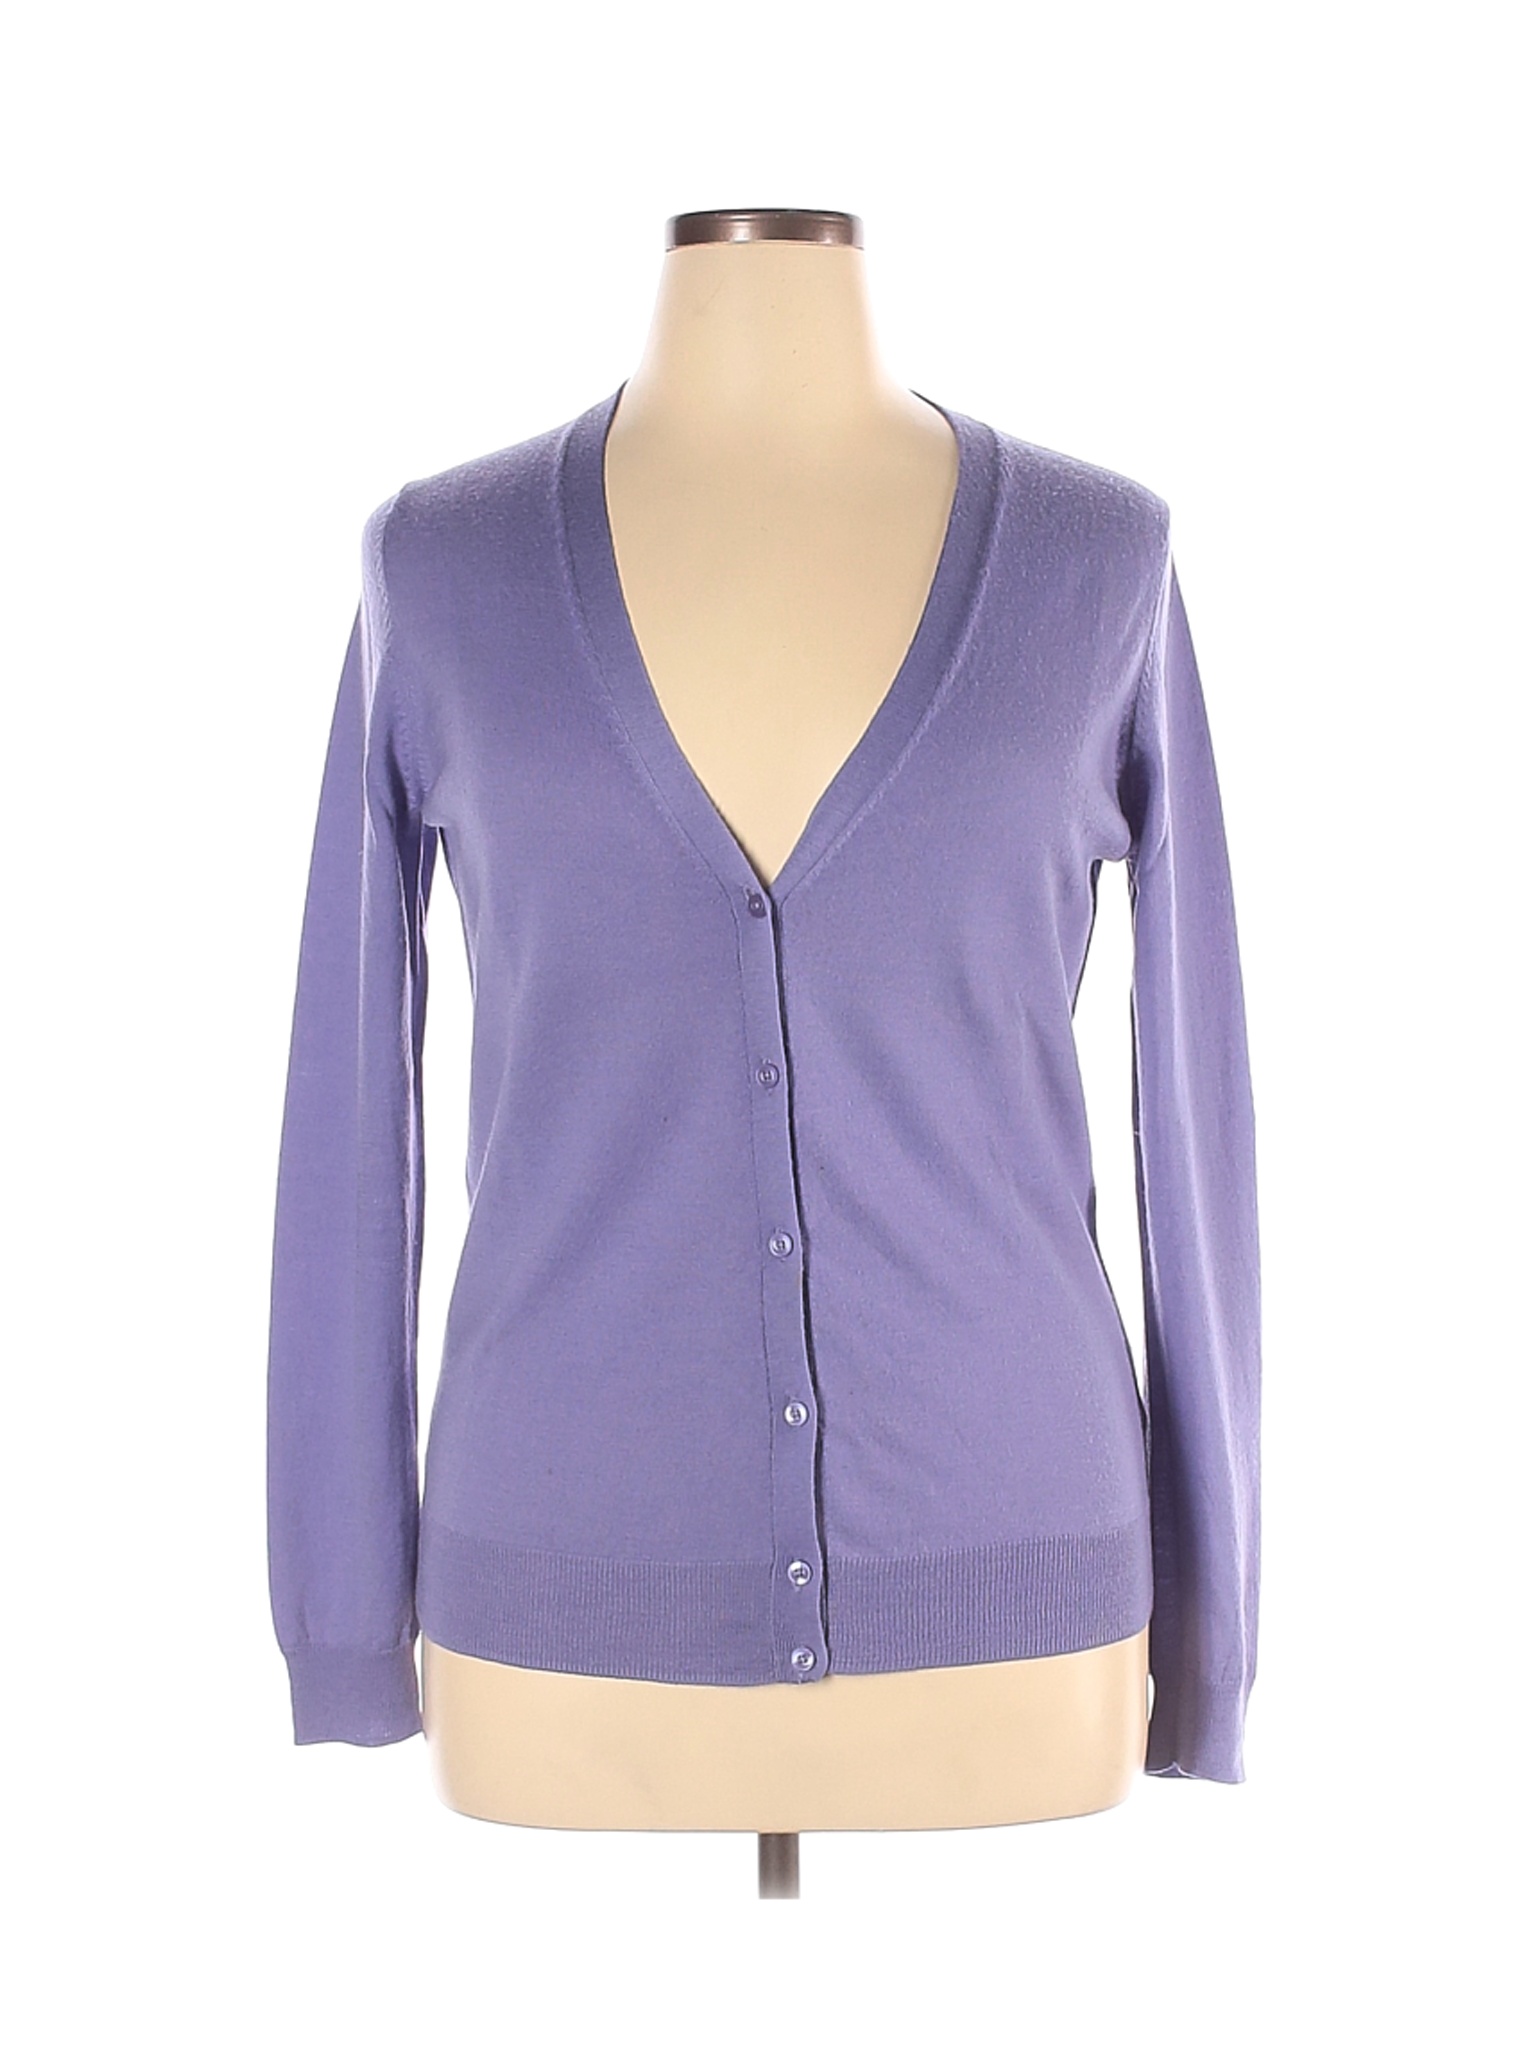 Uniqlo Women Purple Wool Cardigan XL | eBay